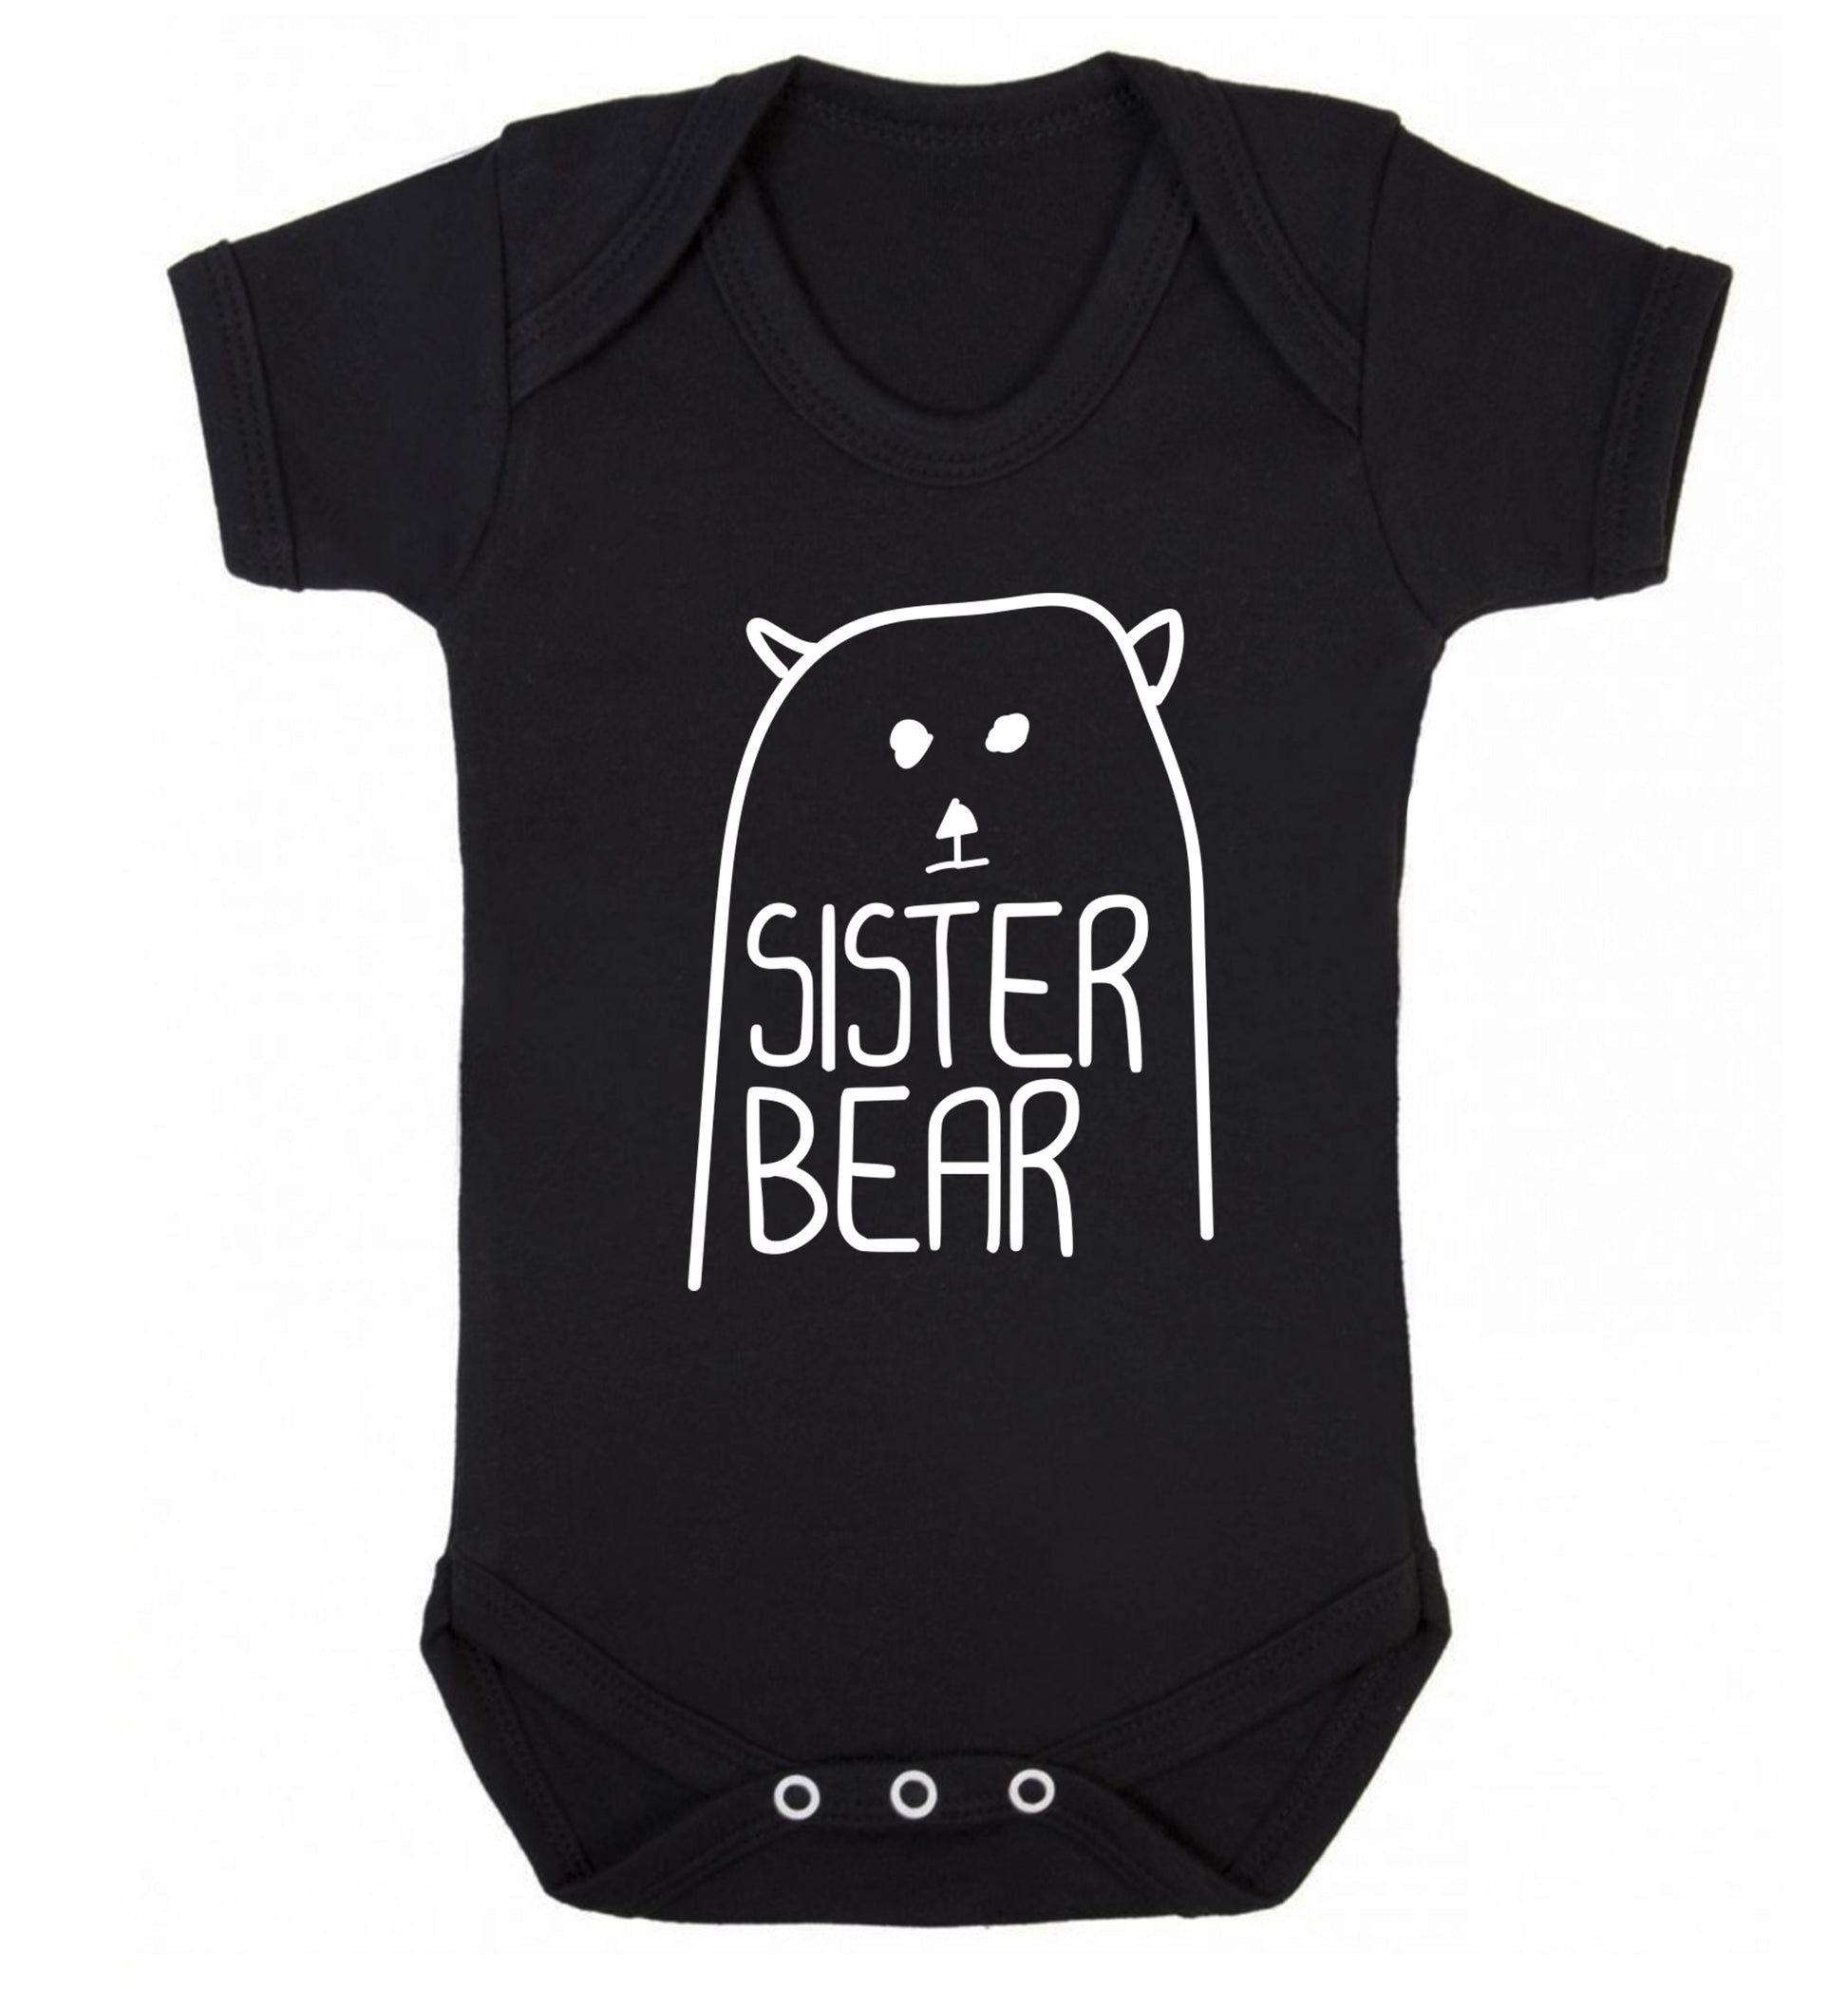 Sister bear Baby Vest black 18-24 months